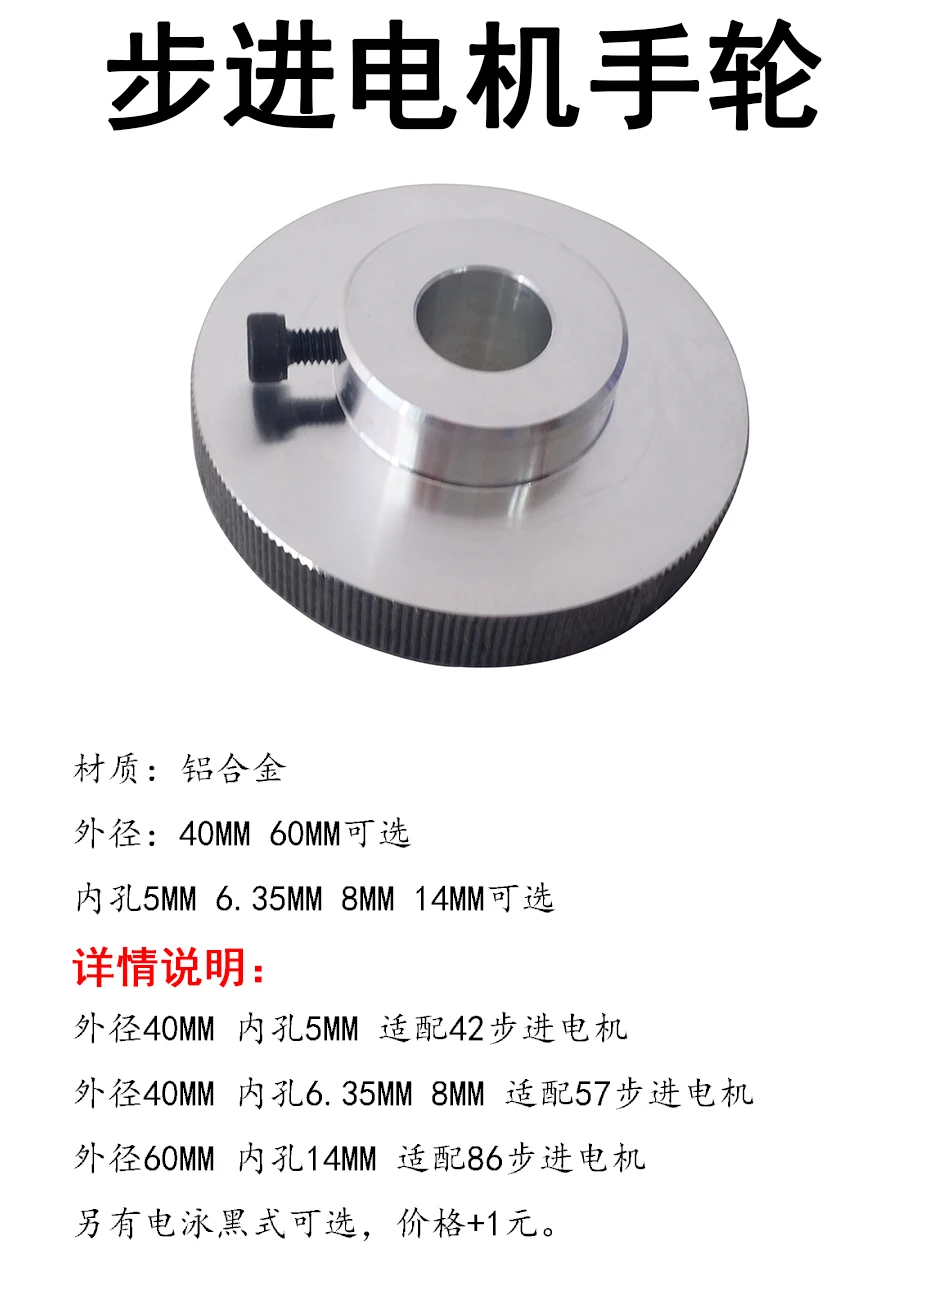 Handwheel for NEMA34 Stepper Motor 14mm Bore CNC Engraving Accessory Hand Carved 